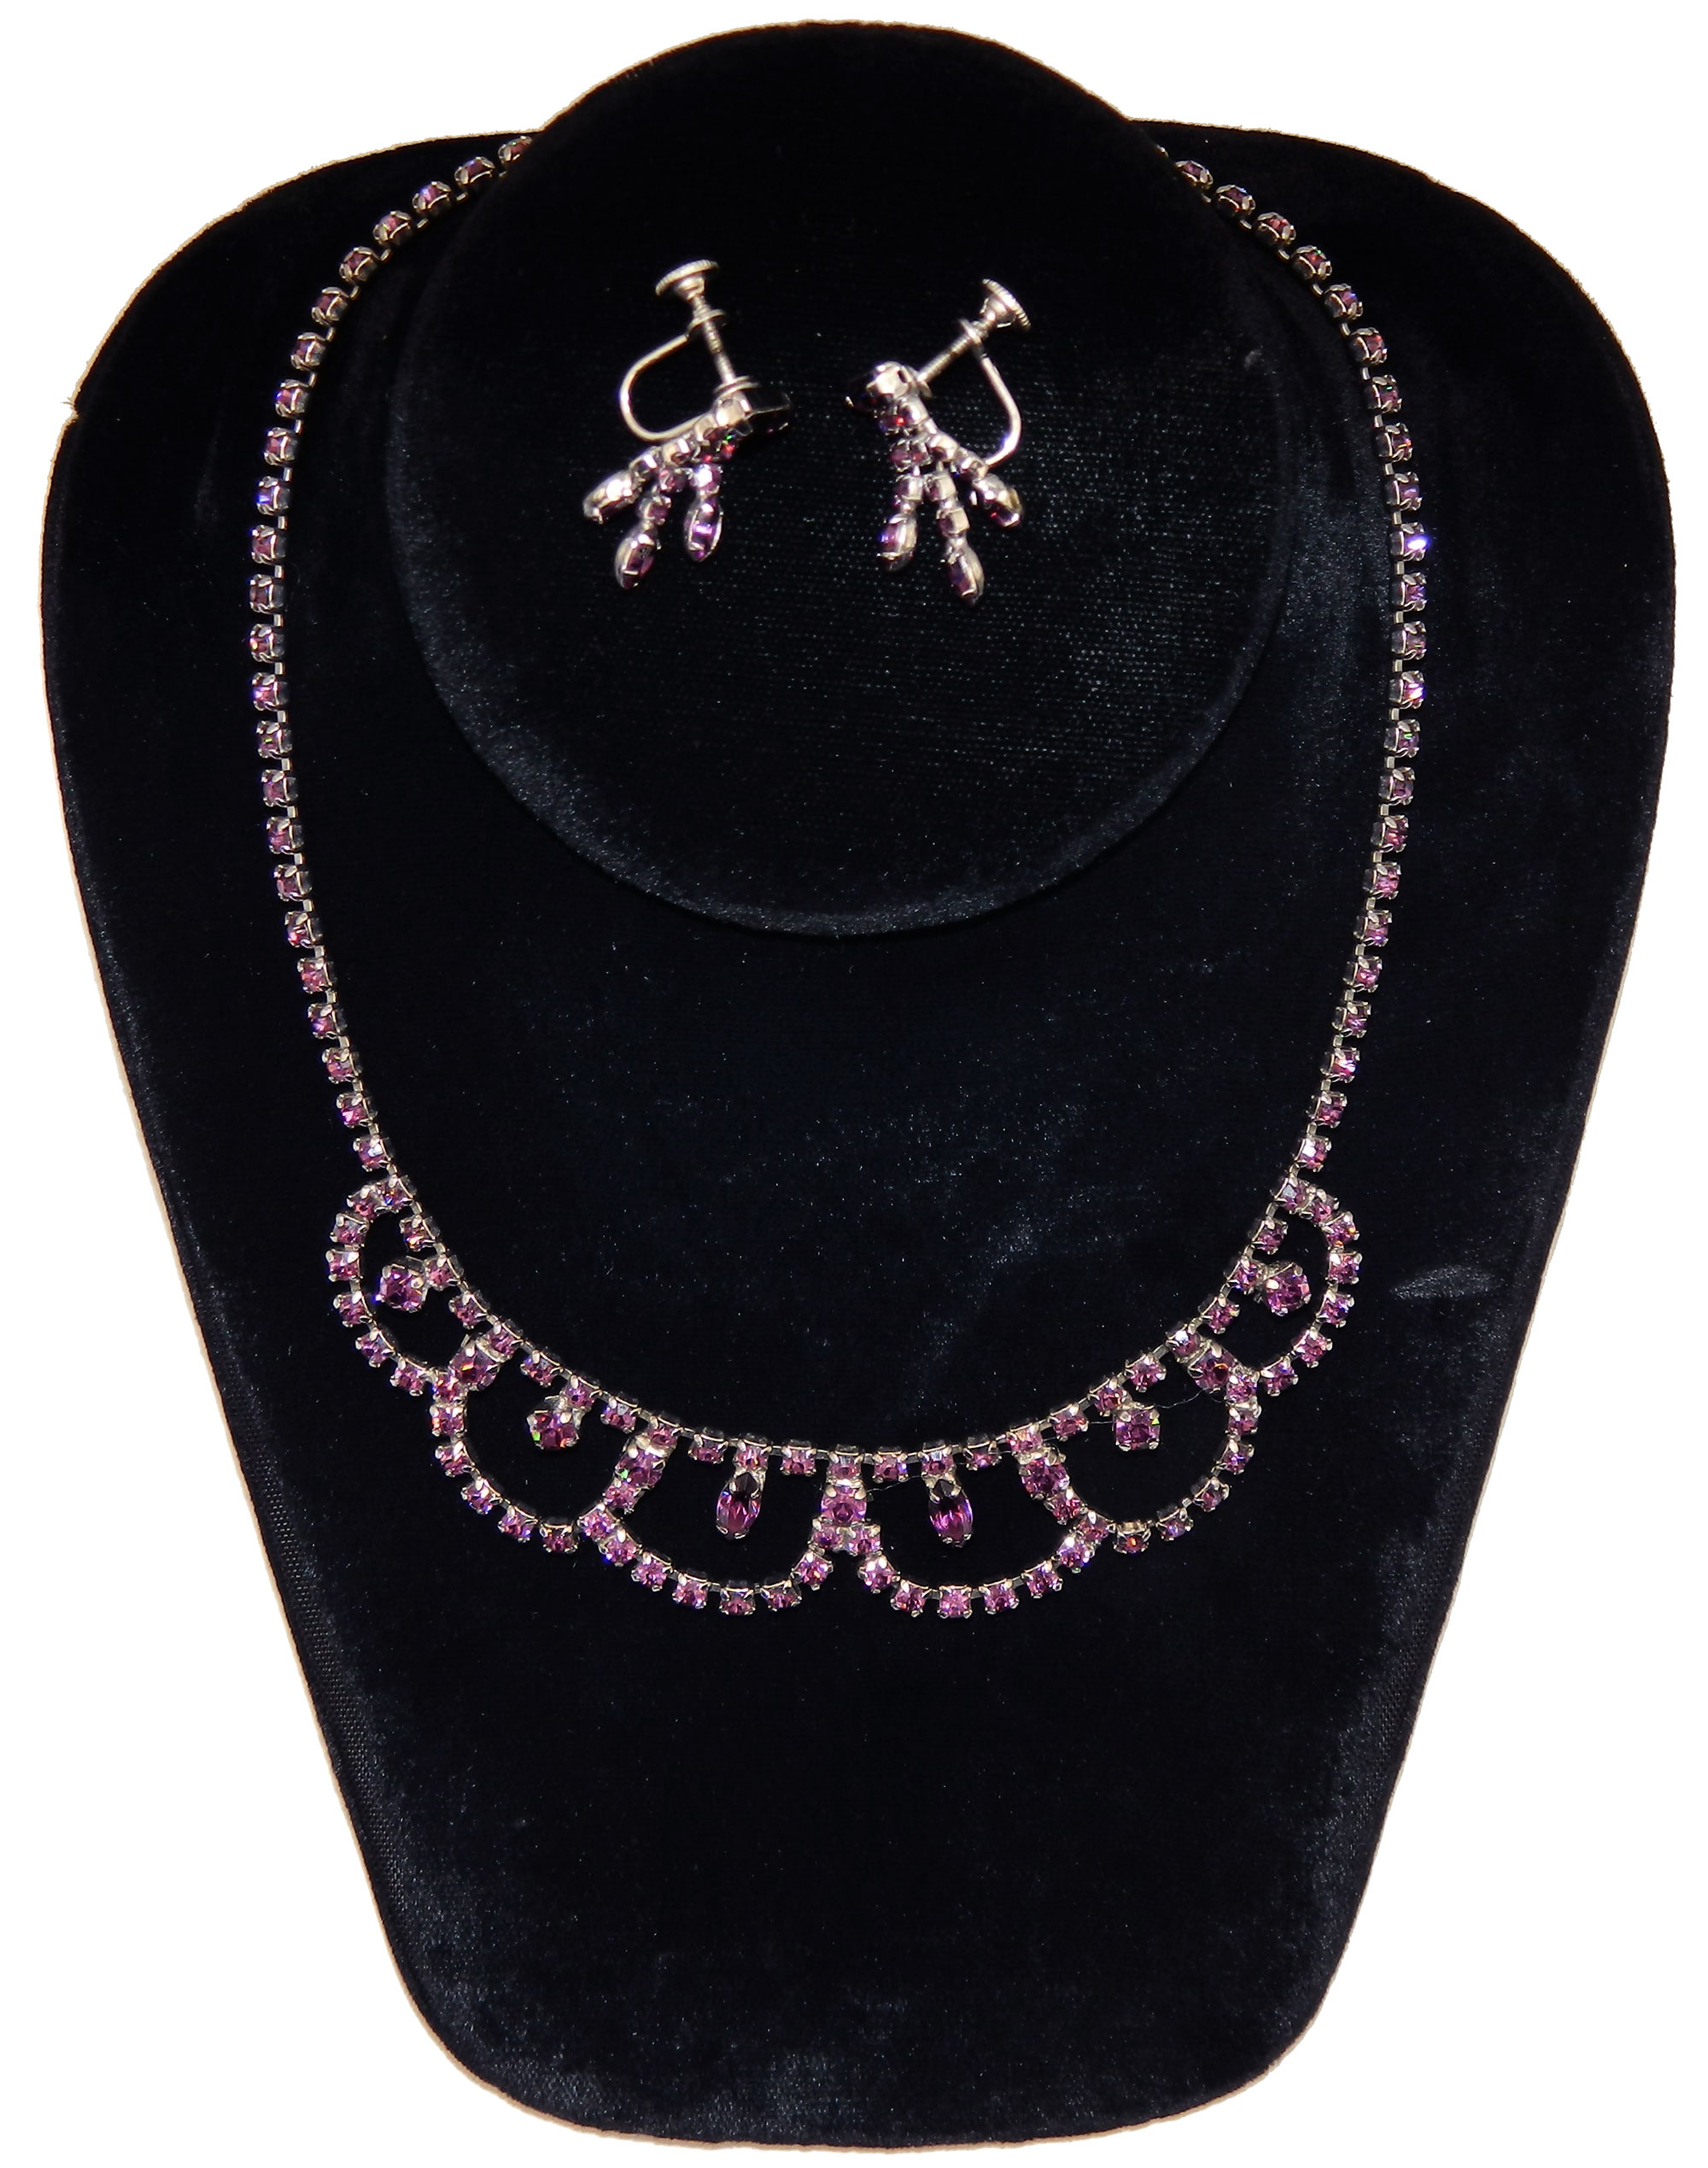 Wiesner purple rhinestone necklace and earring set